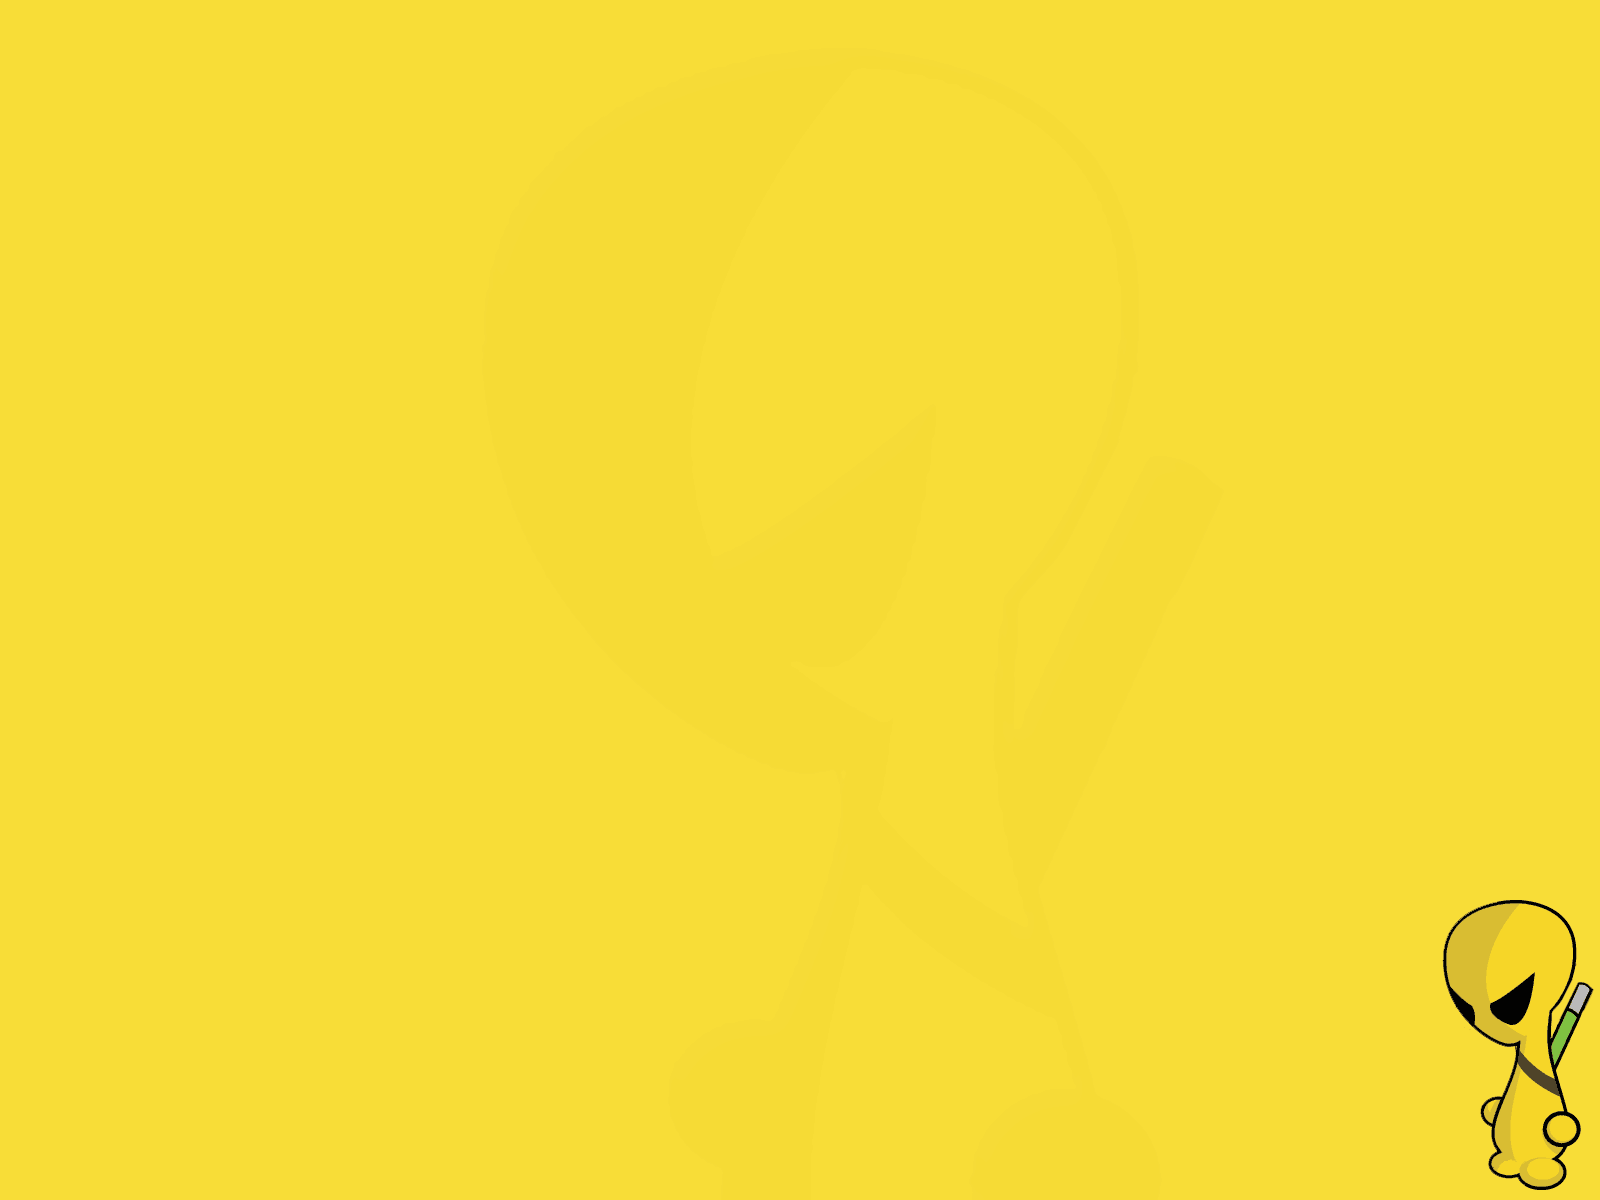 Jark yellow wall. TBC by opticnerve on DeviantArt